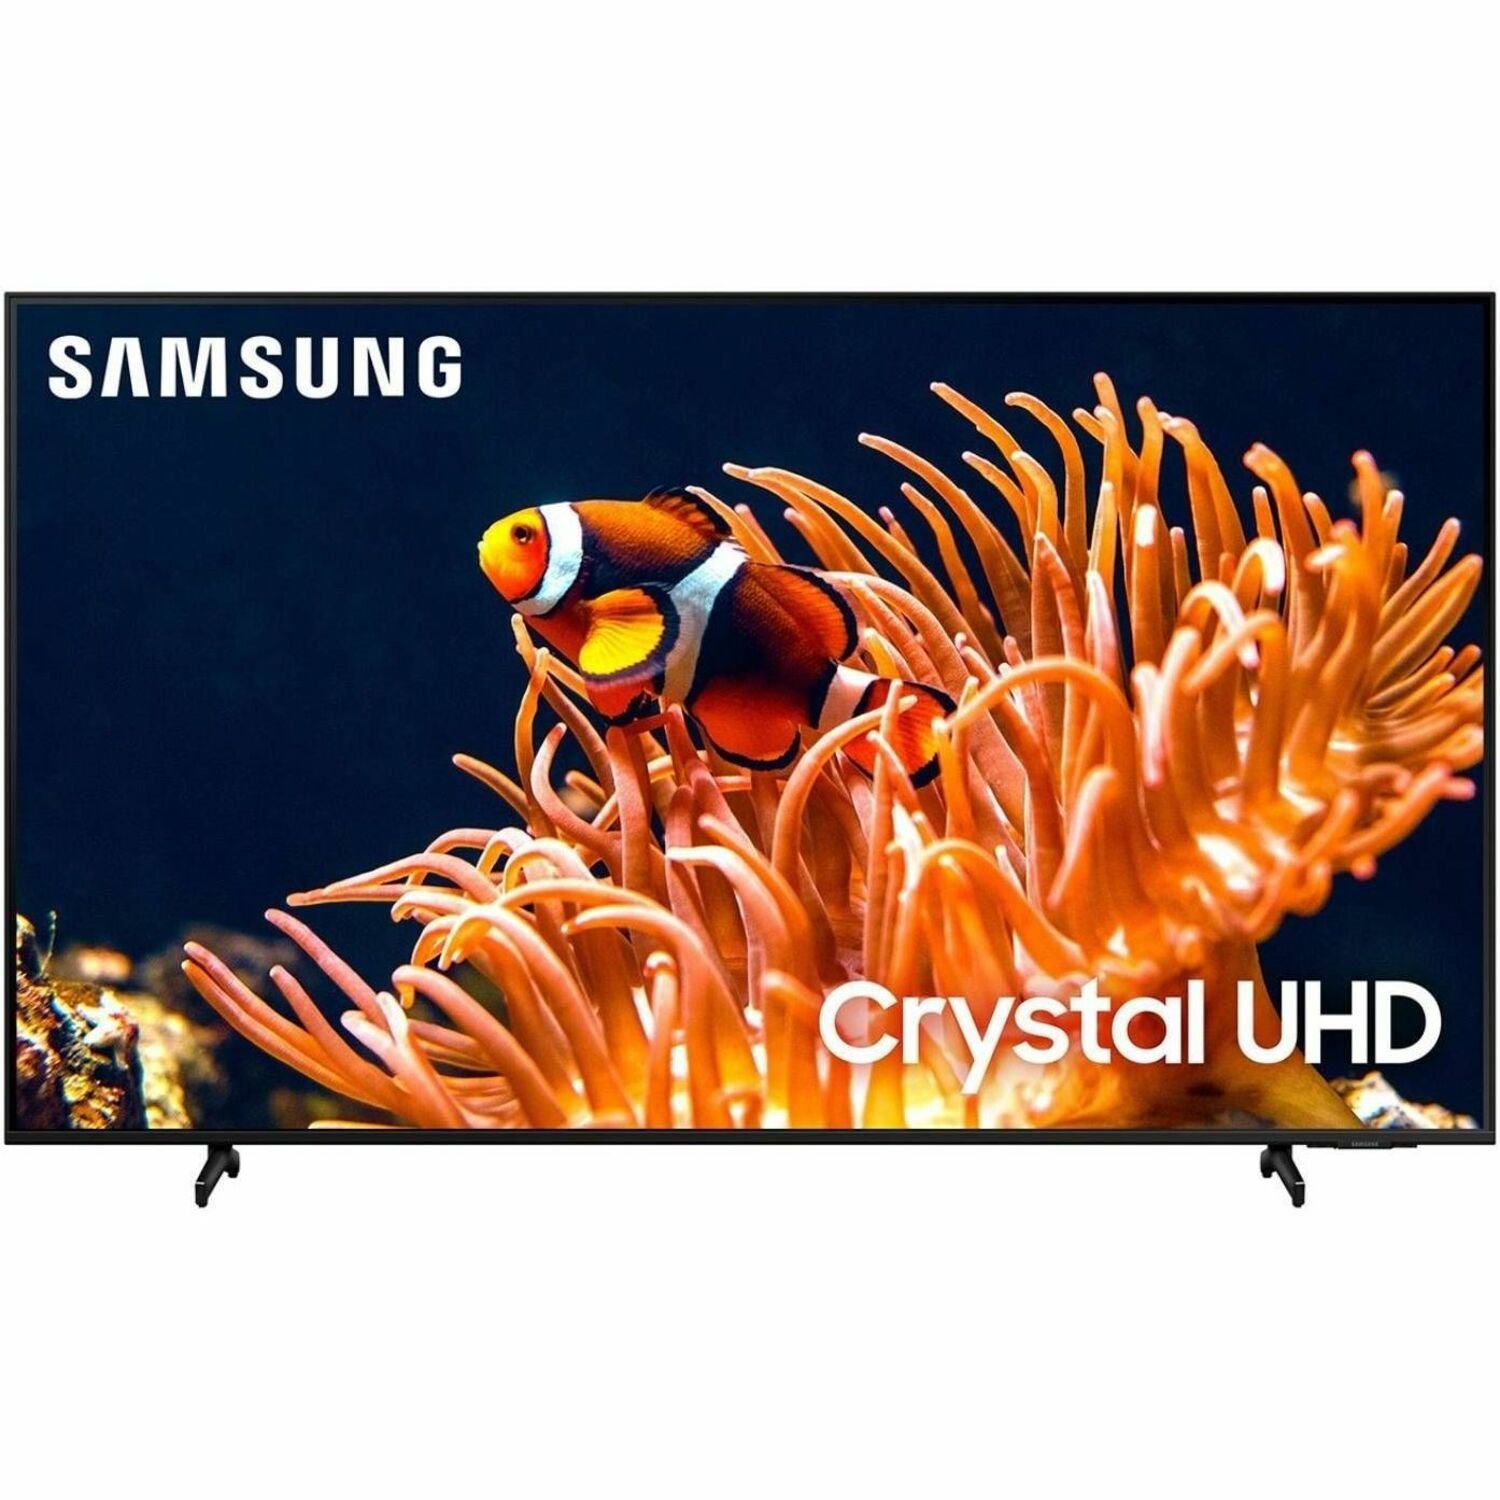 Samsung DU8000 UN75DU8000F 74.5" Smart LED-LCD TV - 4K UHDTV - High Dynamic Range (HDR) - Black